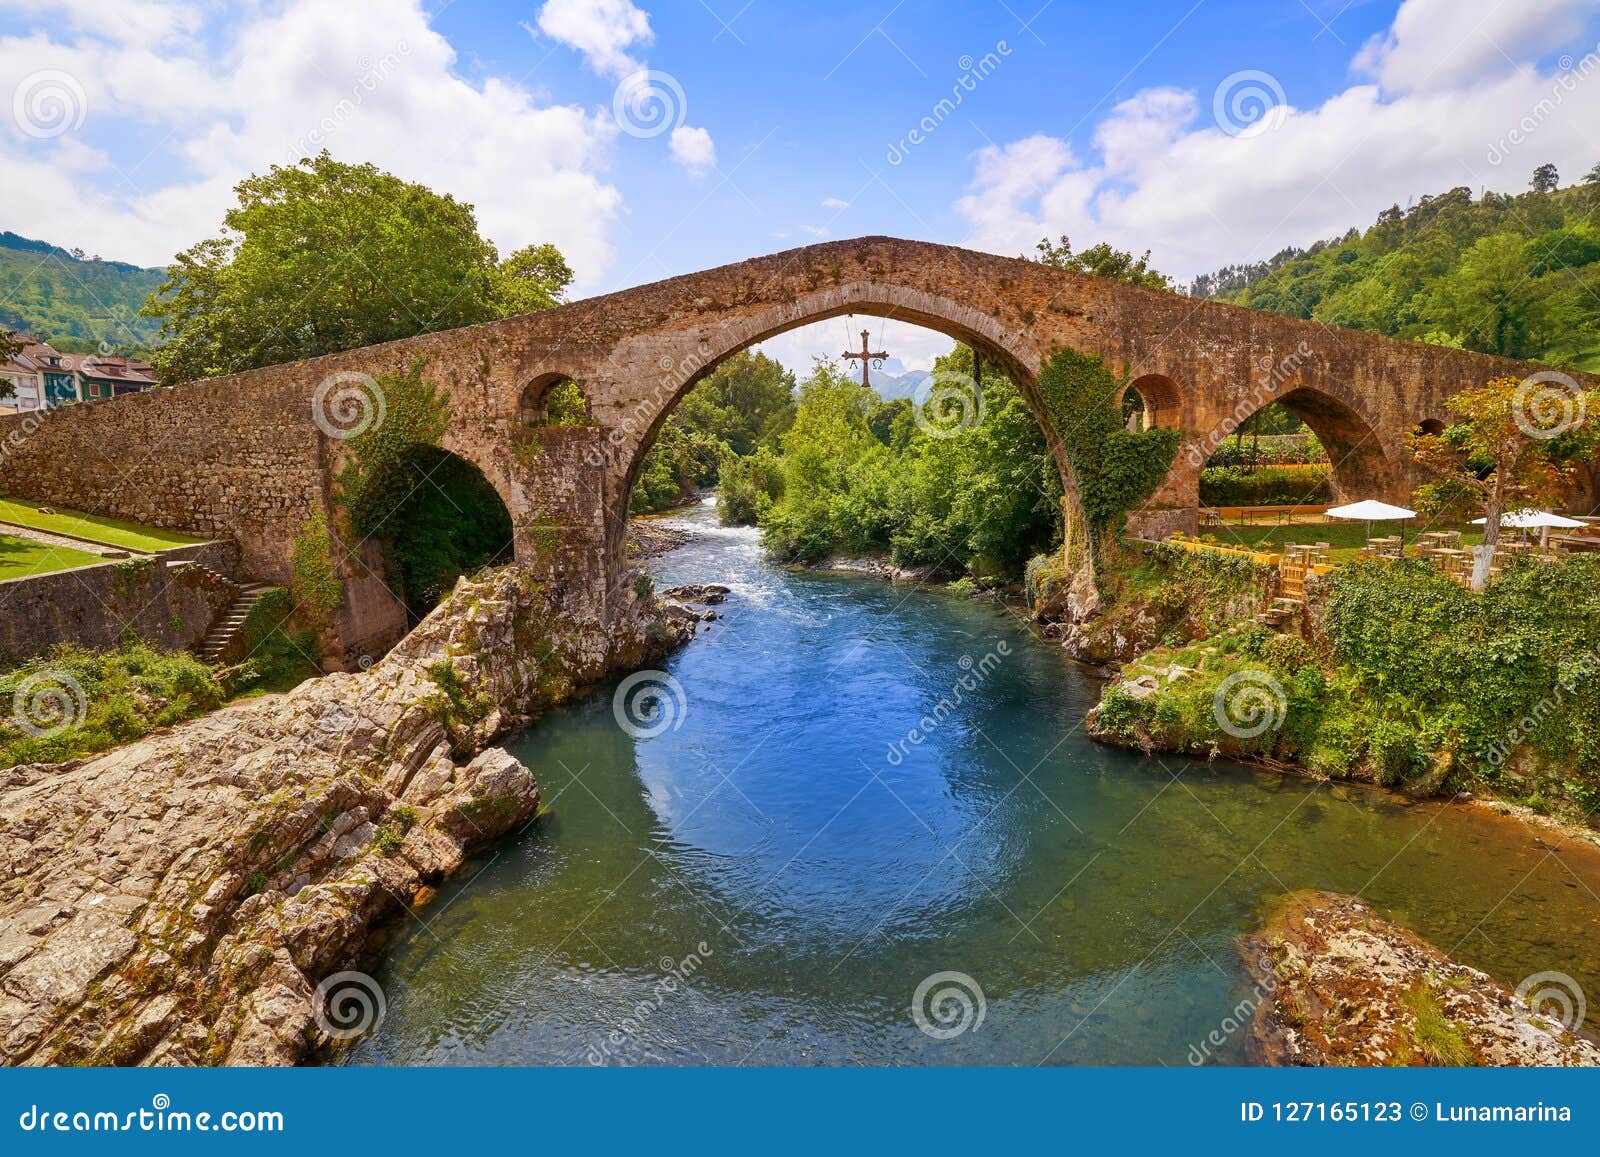 cangas de onis roman bridge in asturias spain